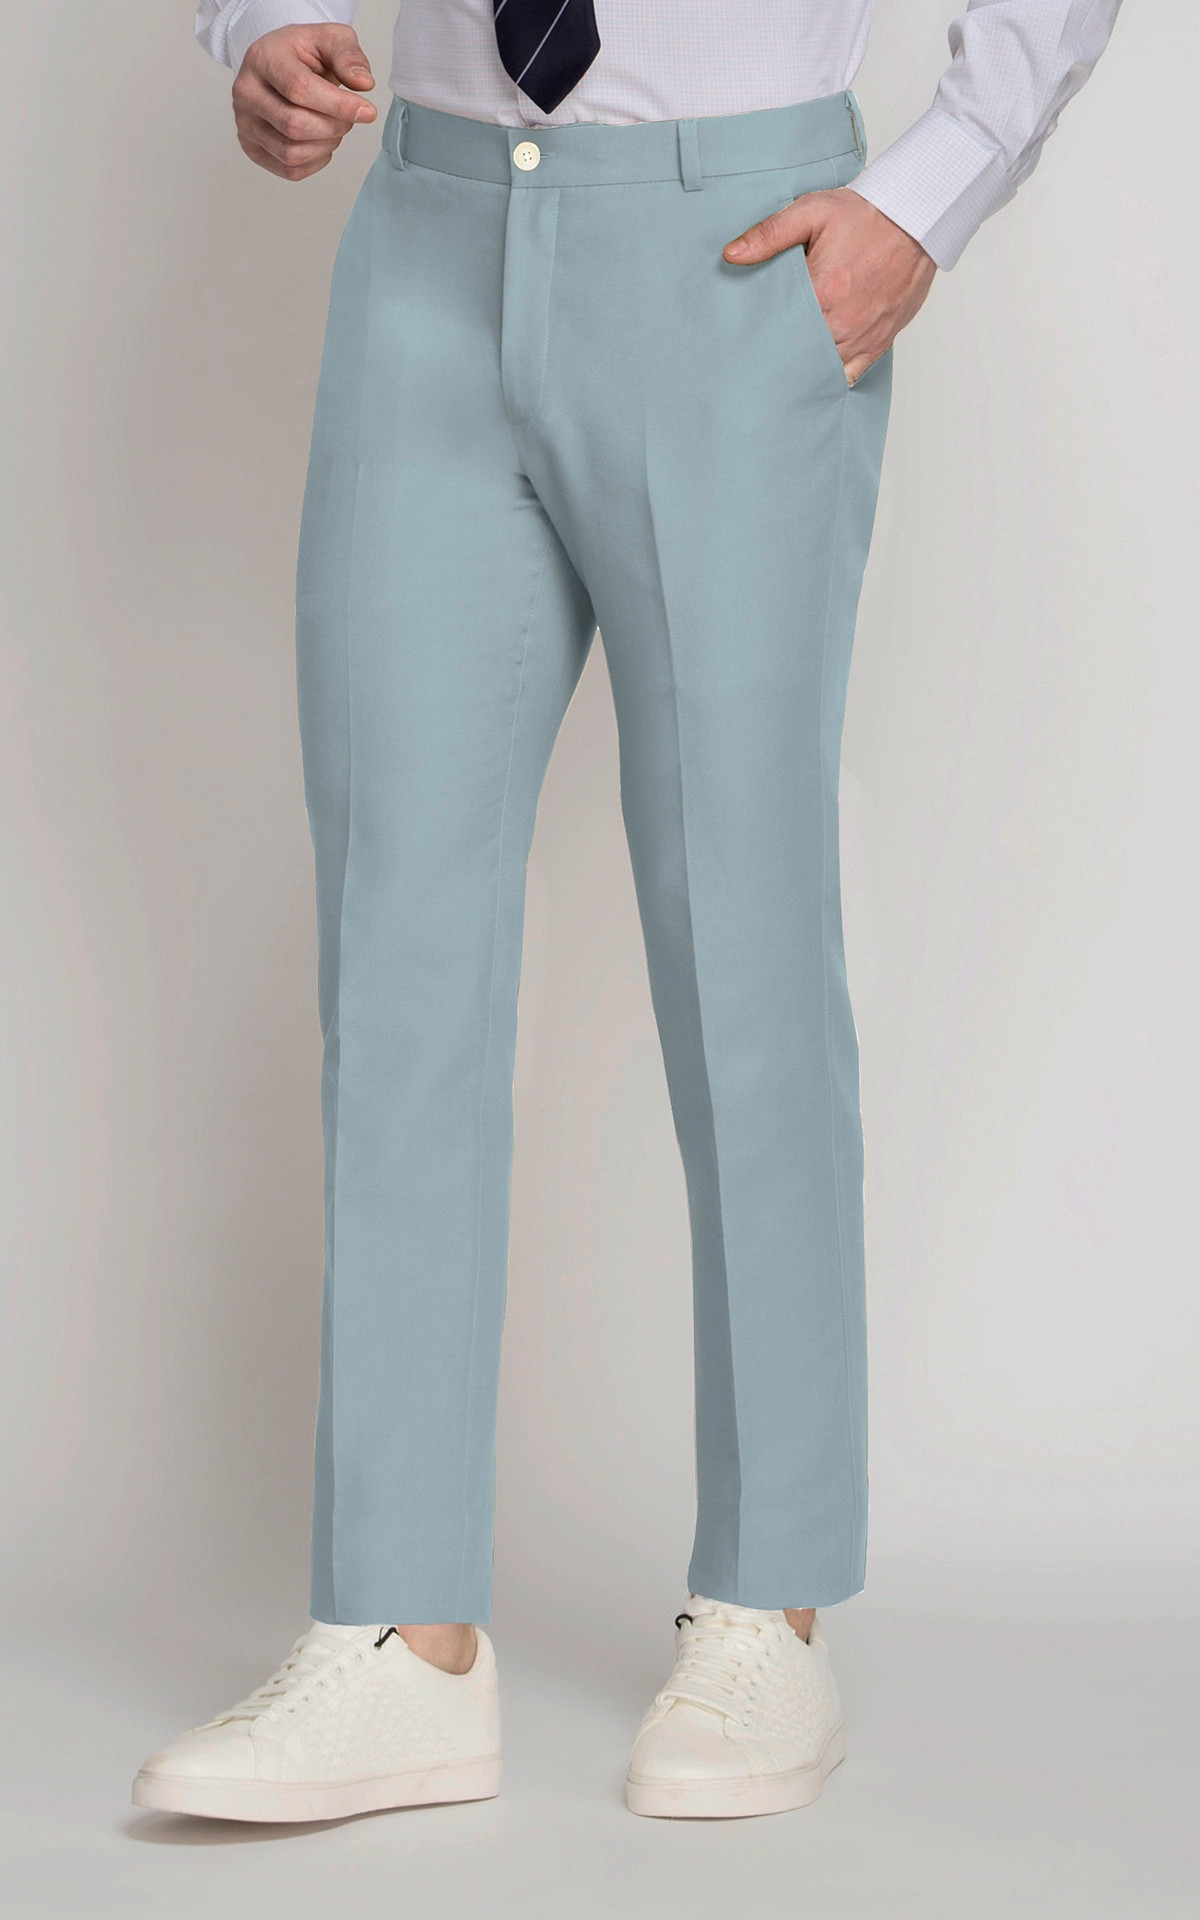 2 x Formal Dress Pants Trousers Custom Made Mens Bespoke Business Pants/Slacks  | eBay